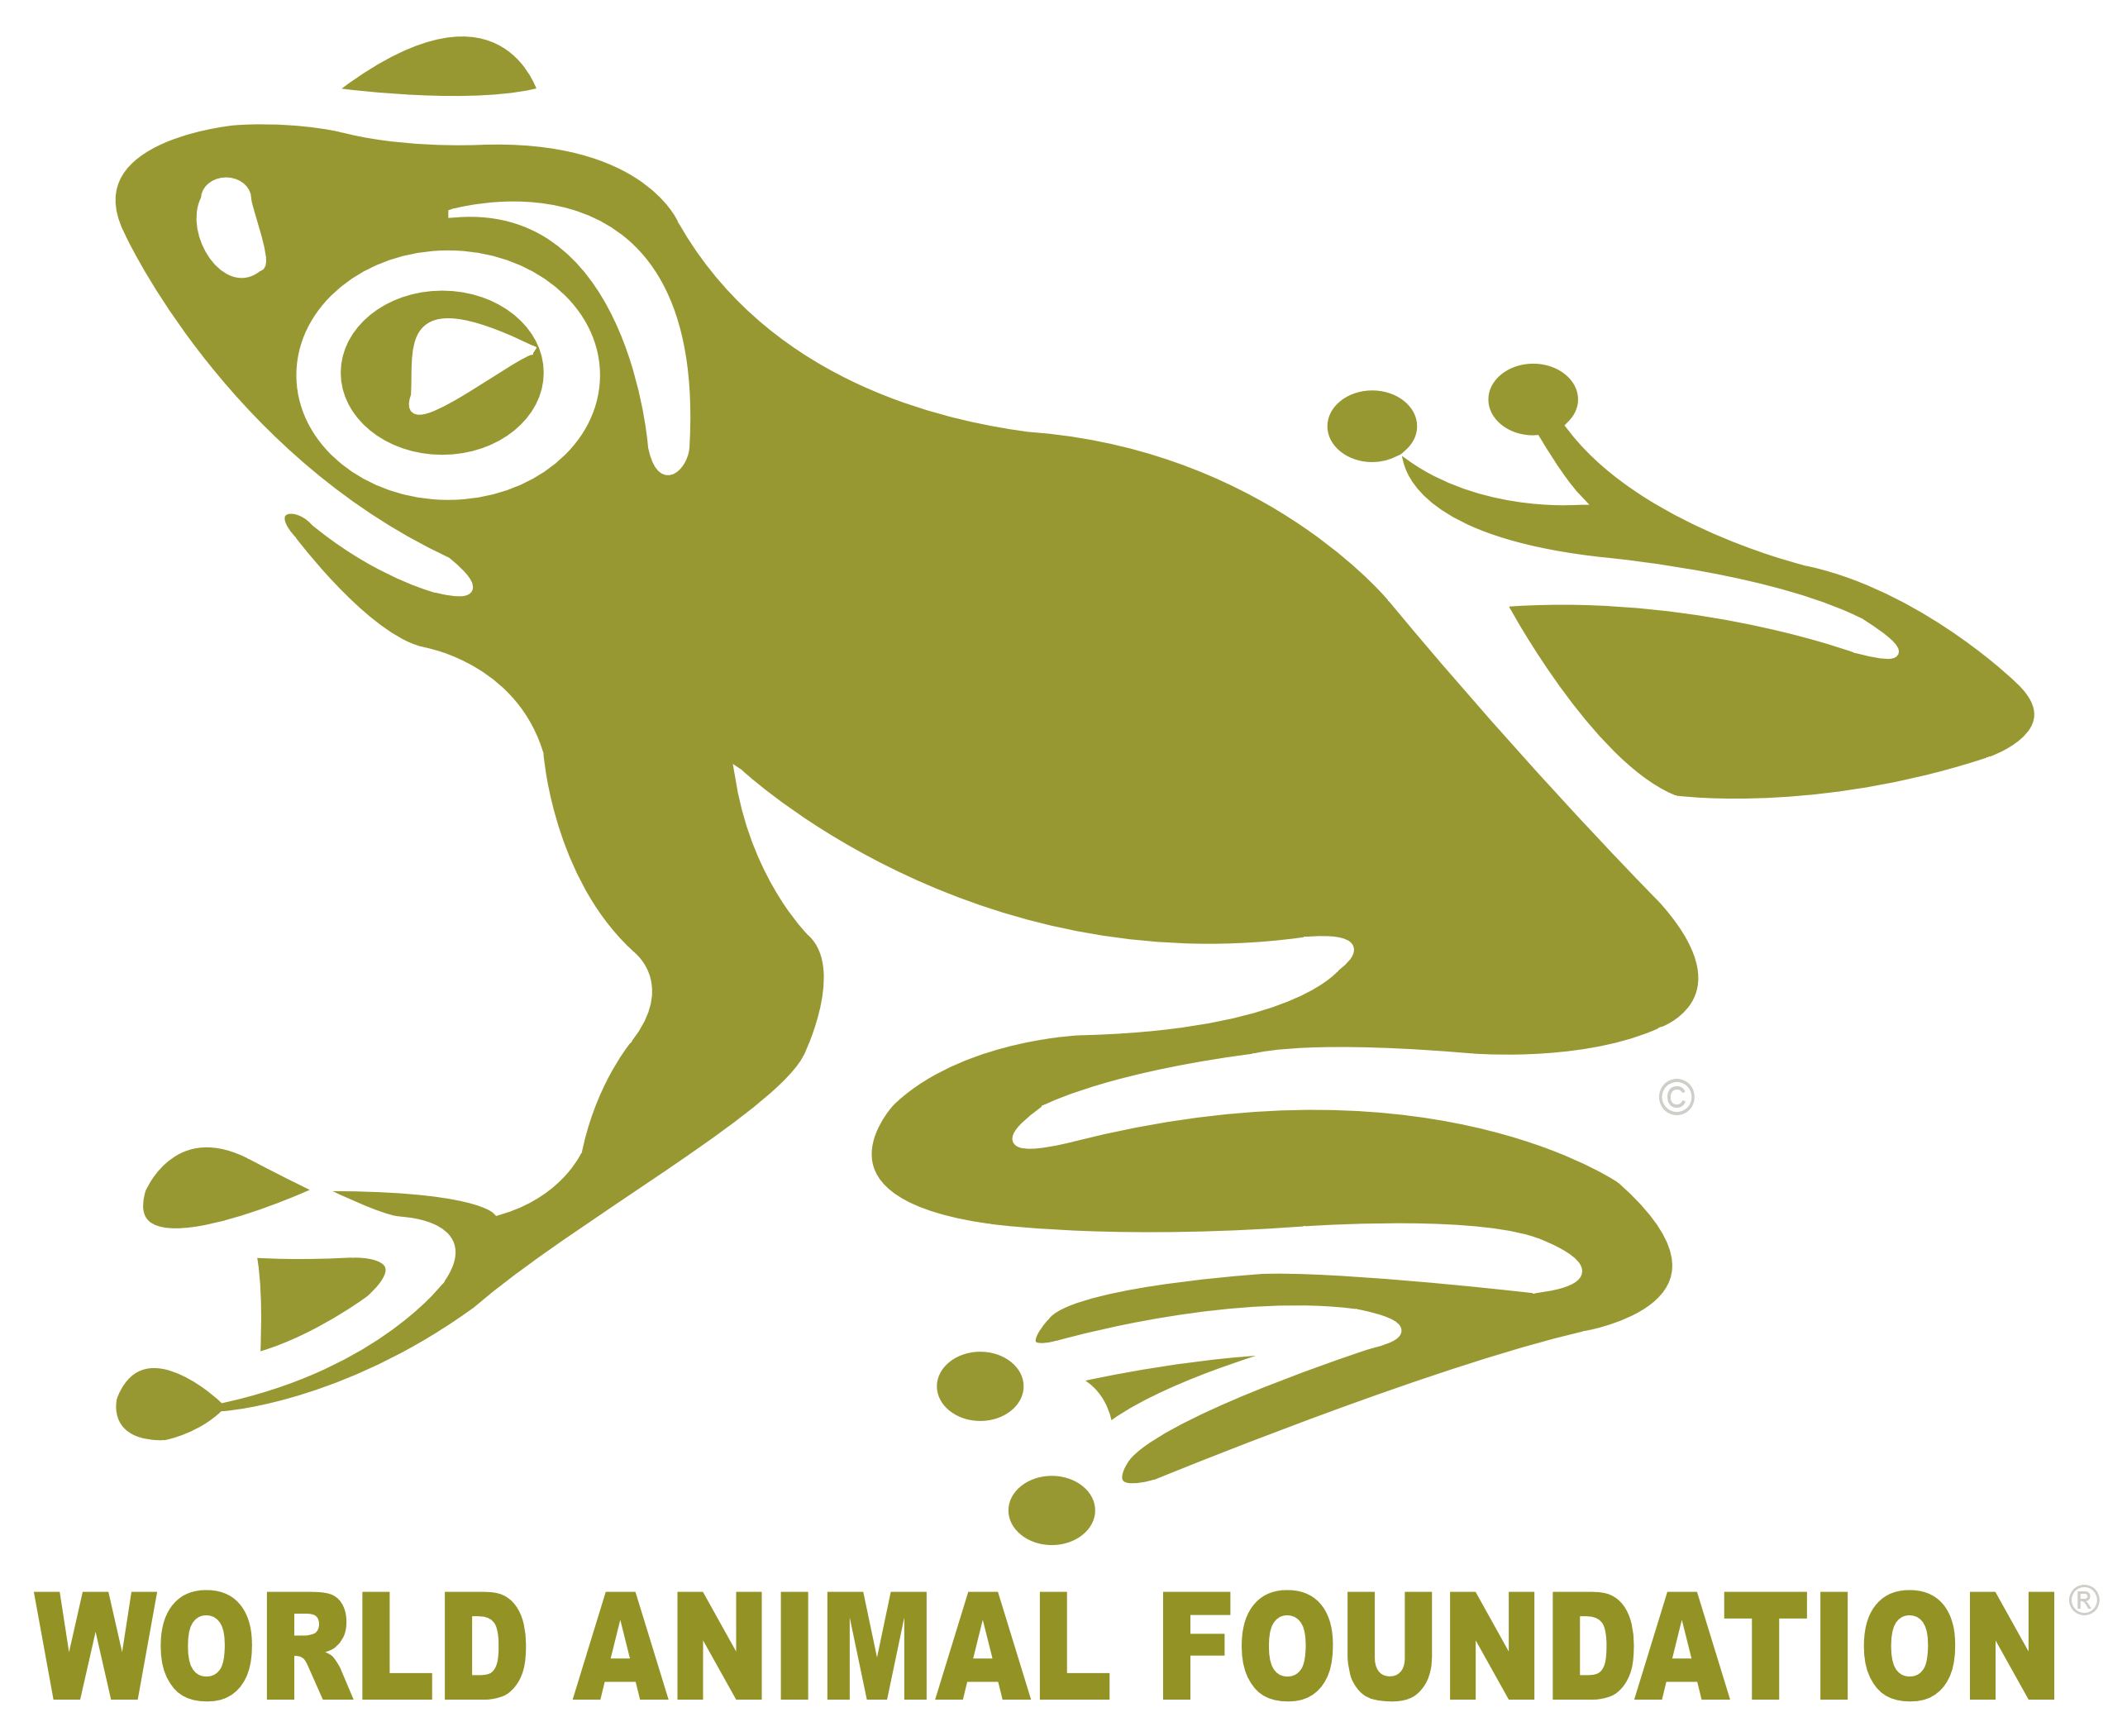 Organized clipart fact sheet. World animal foundation appalachian